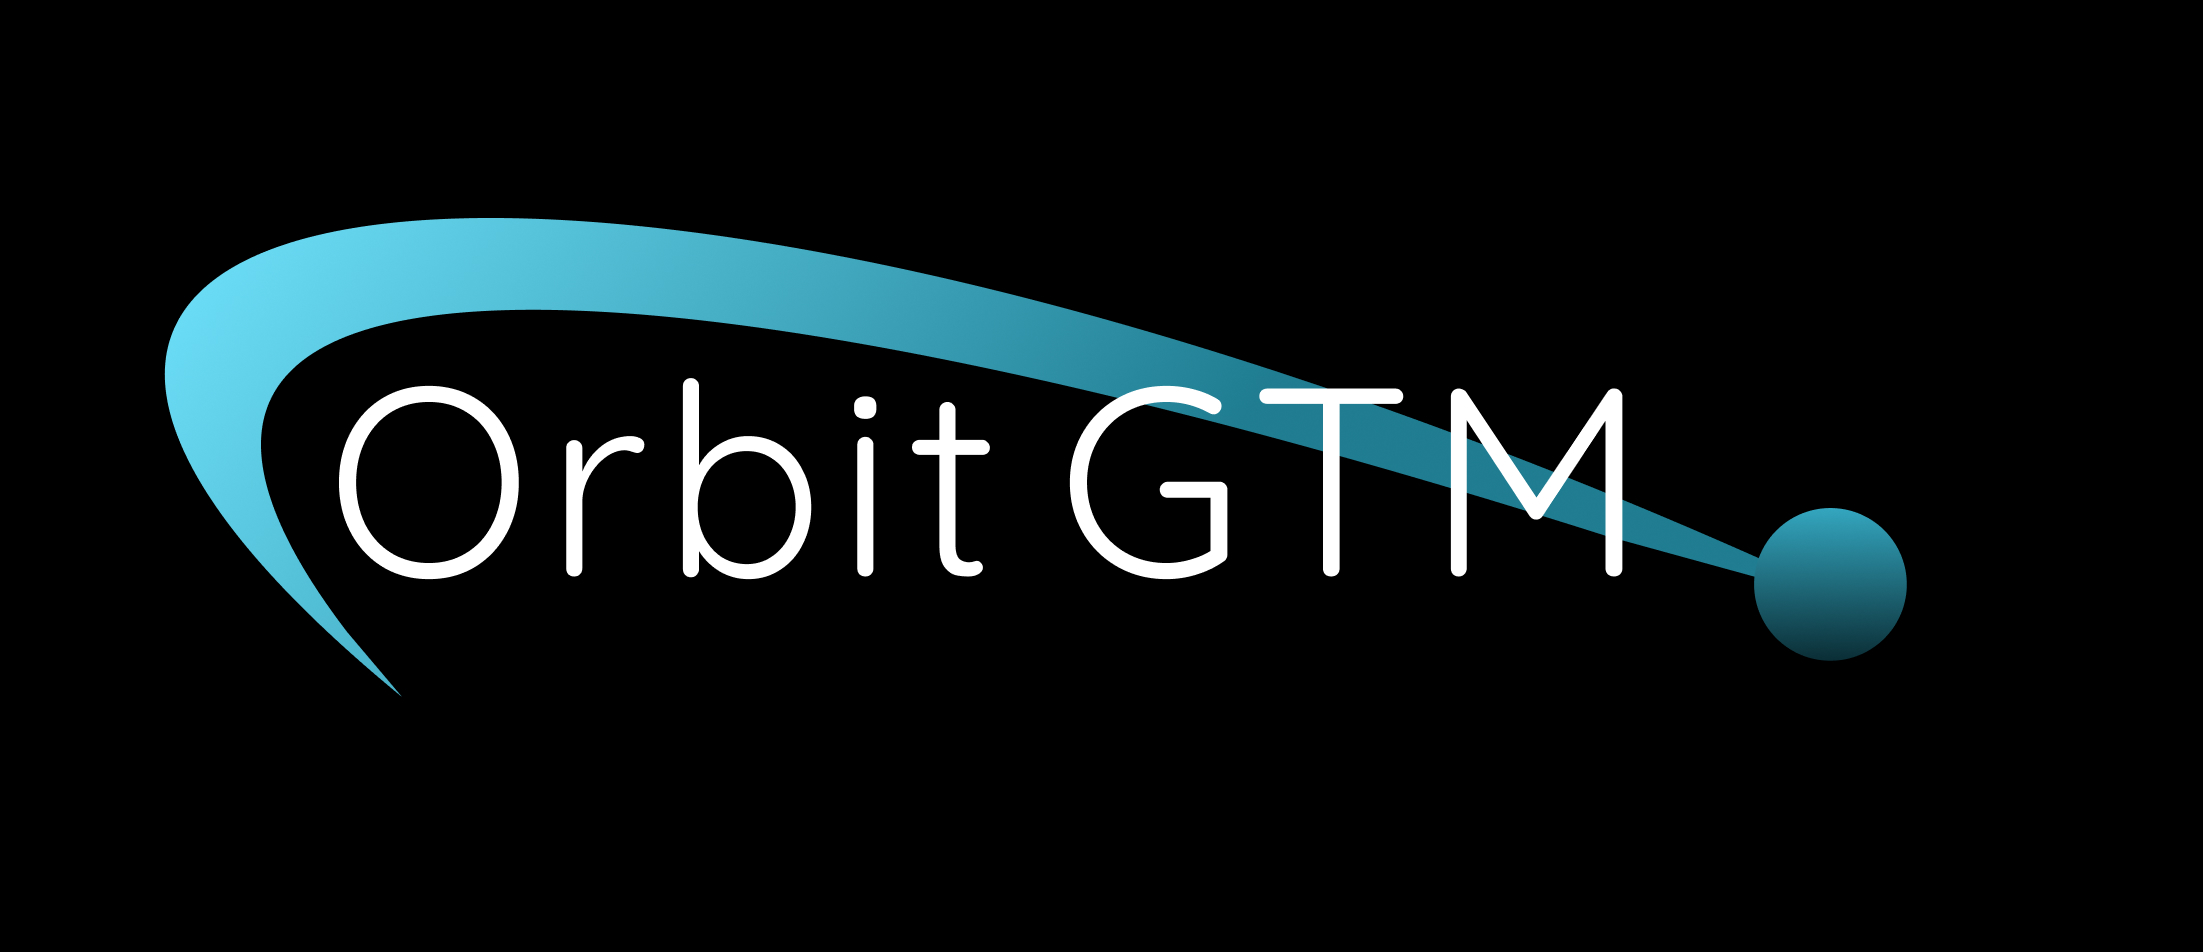 OrbitGTM logo